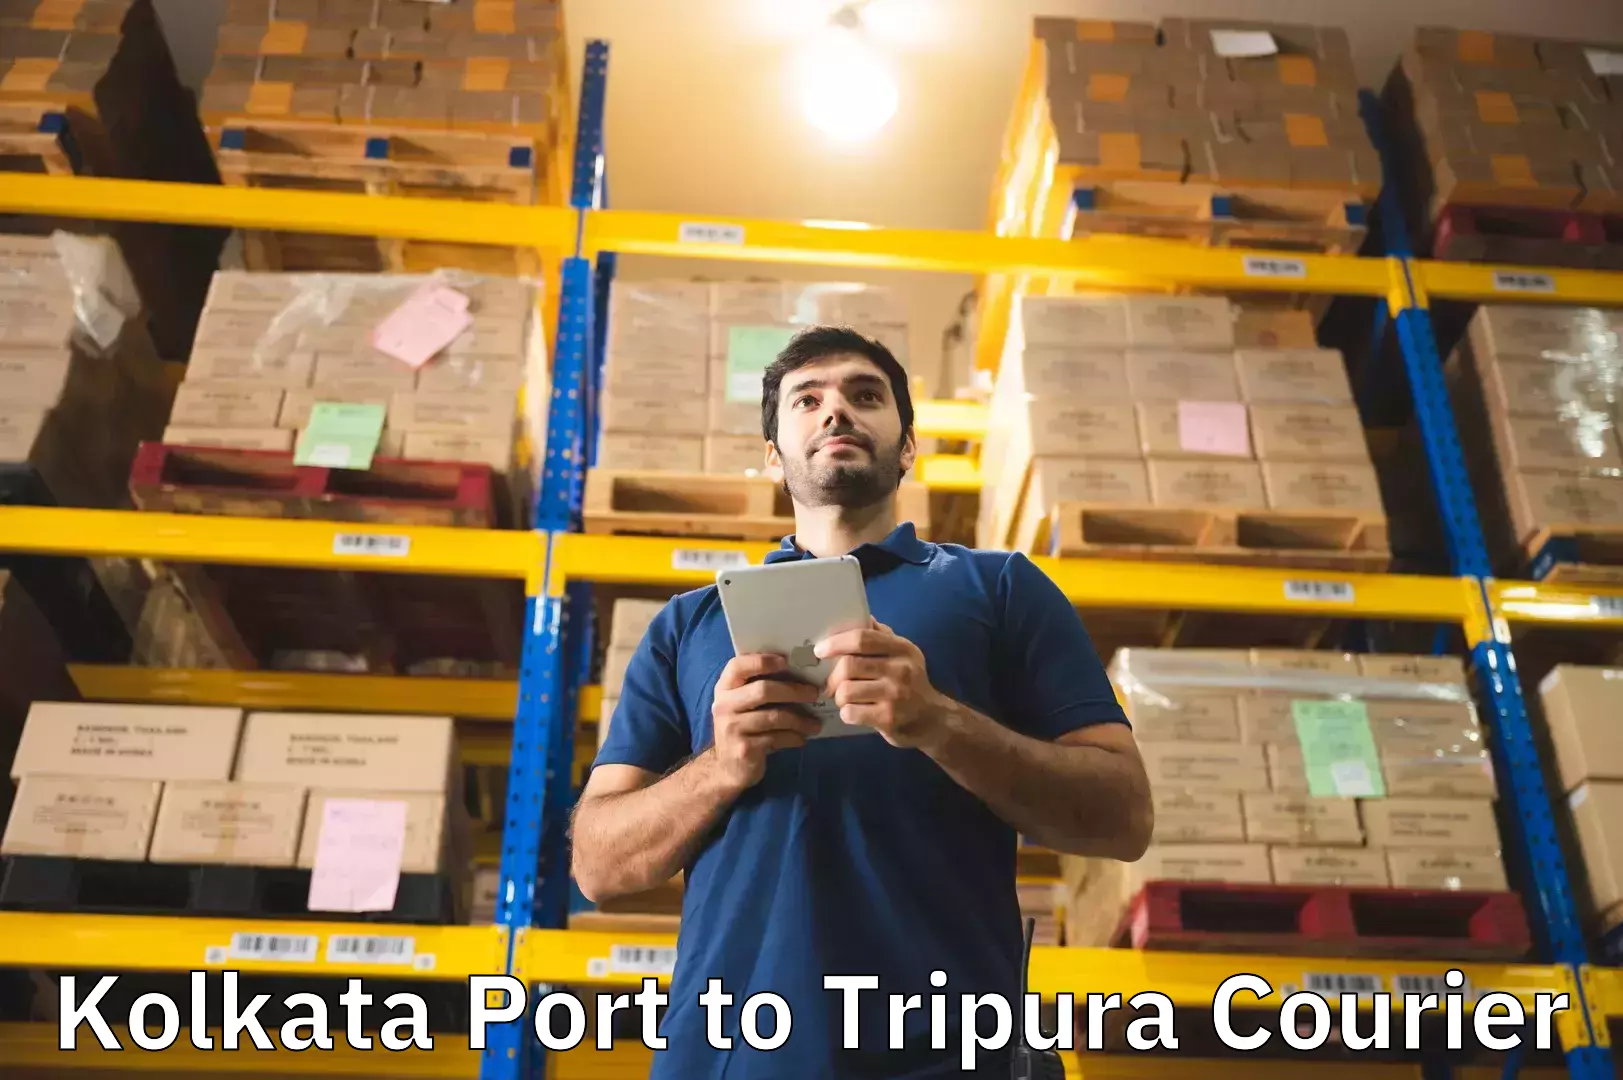 Luggage shipment specialists Kolkata Port to Tripura